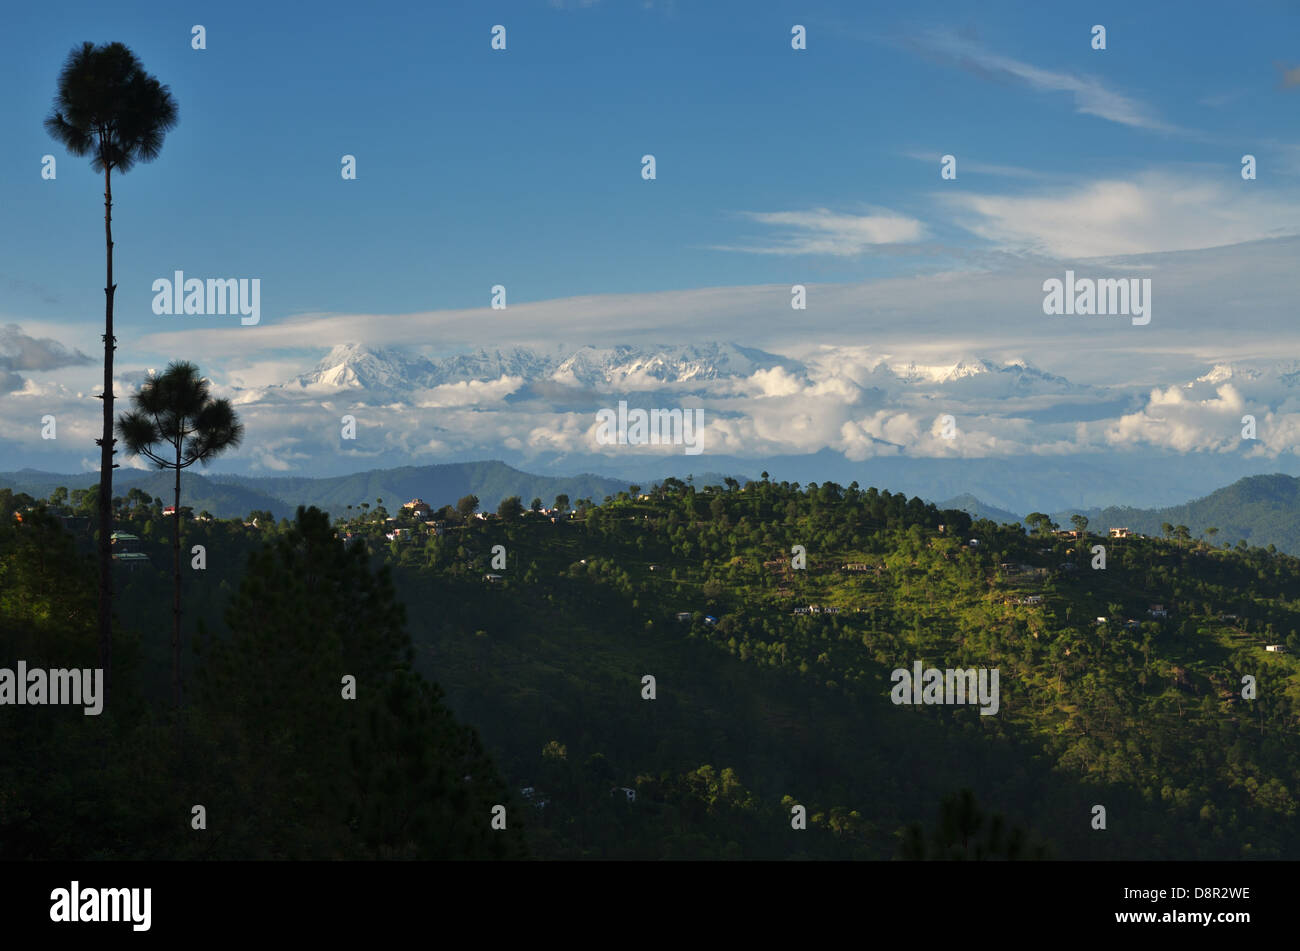 Village in the Kumaon region with Himalayas in background, Almora, Uttarakhand, India Stock Photo